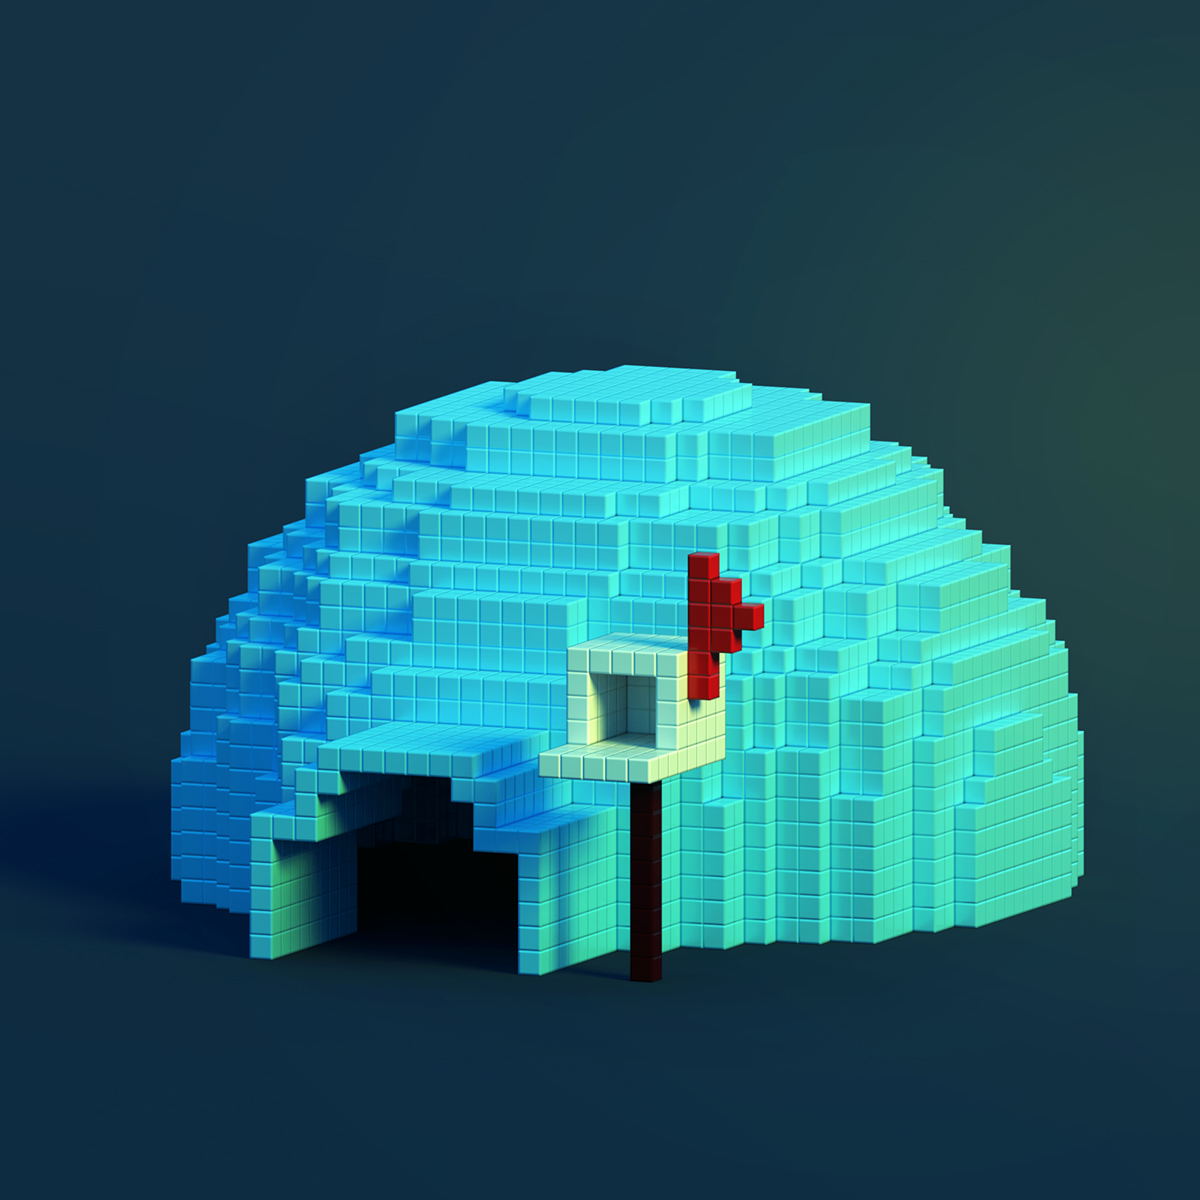 voxel Magicavoxel art igloo house 3D Render